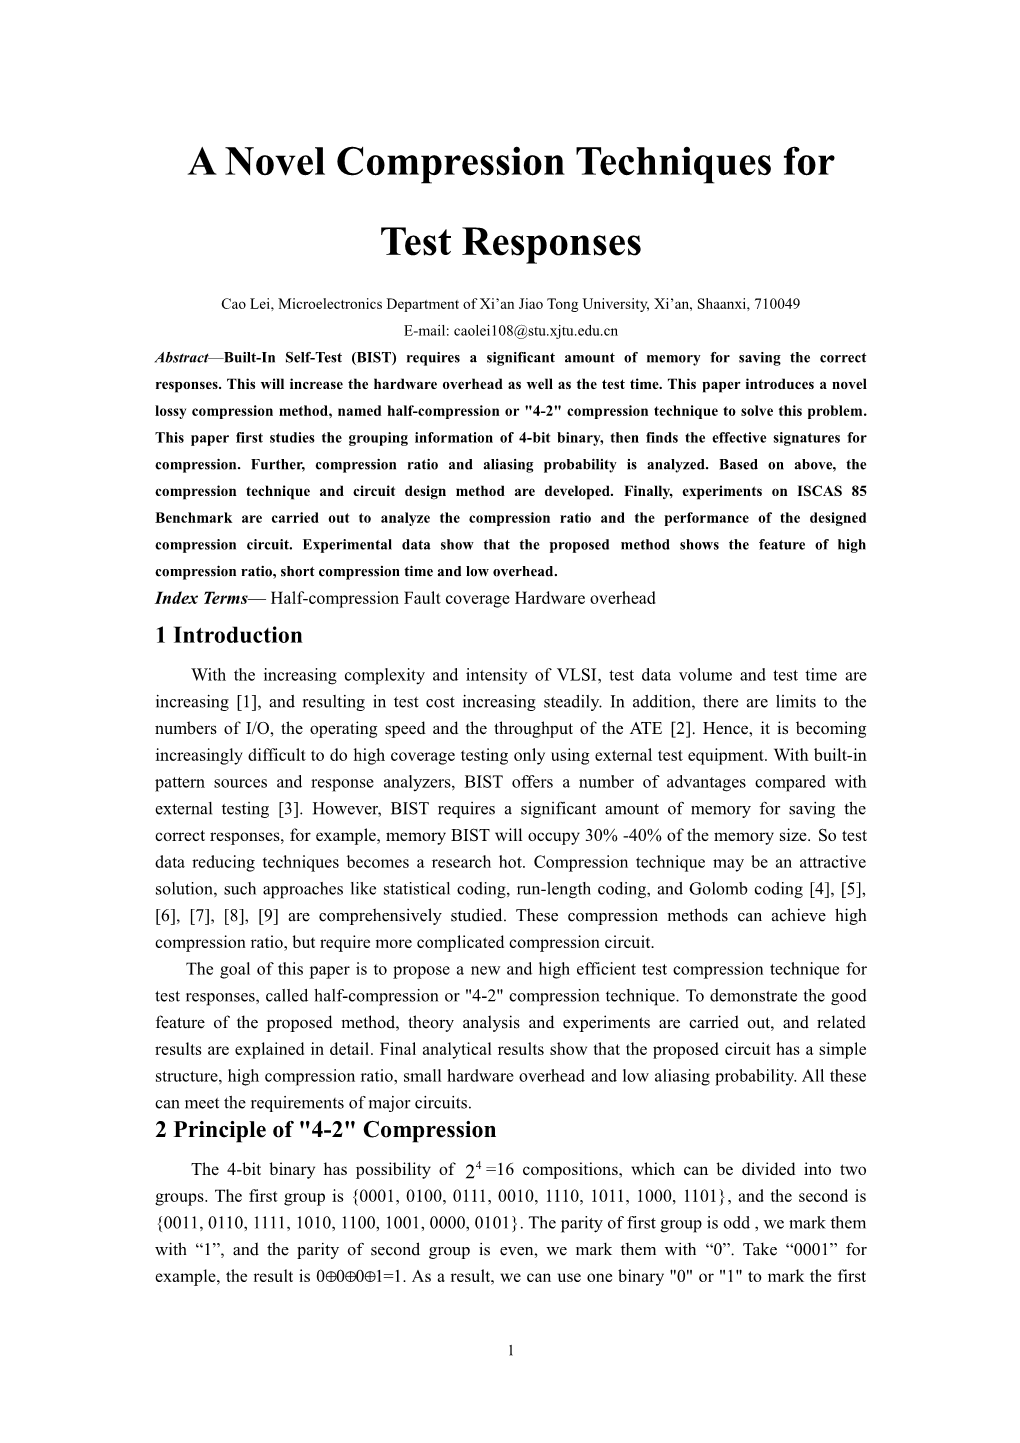 A Noval Compression Techniques for Test Responses